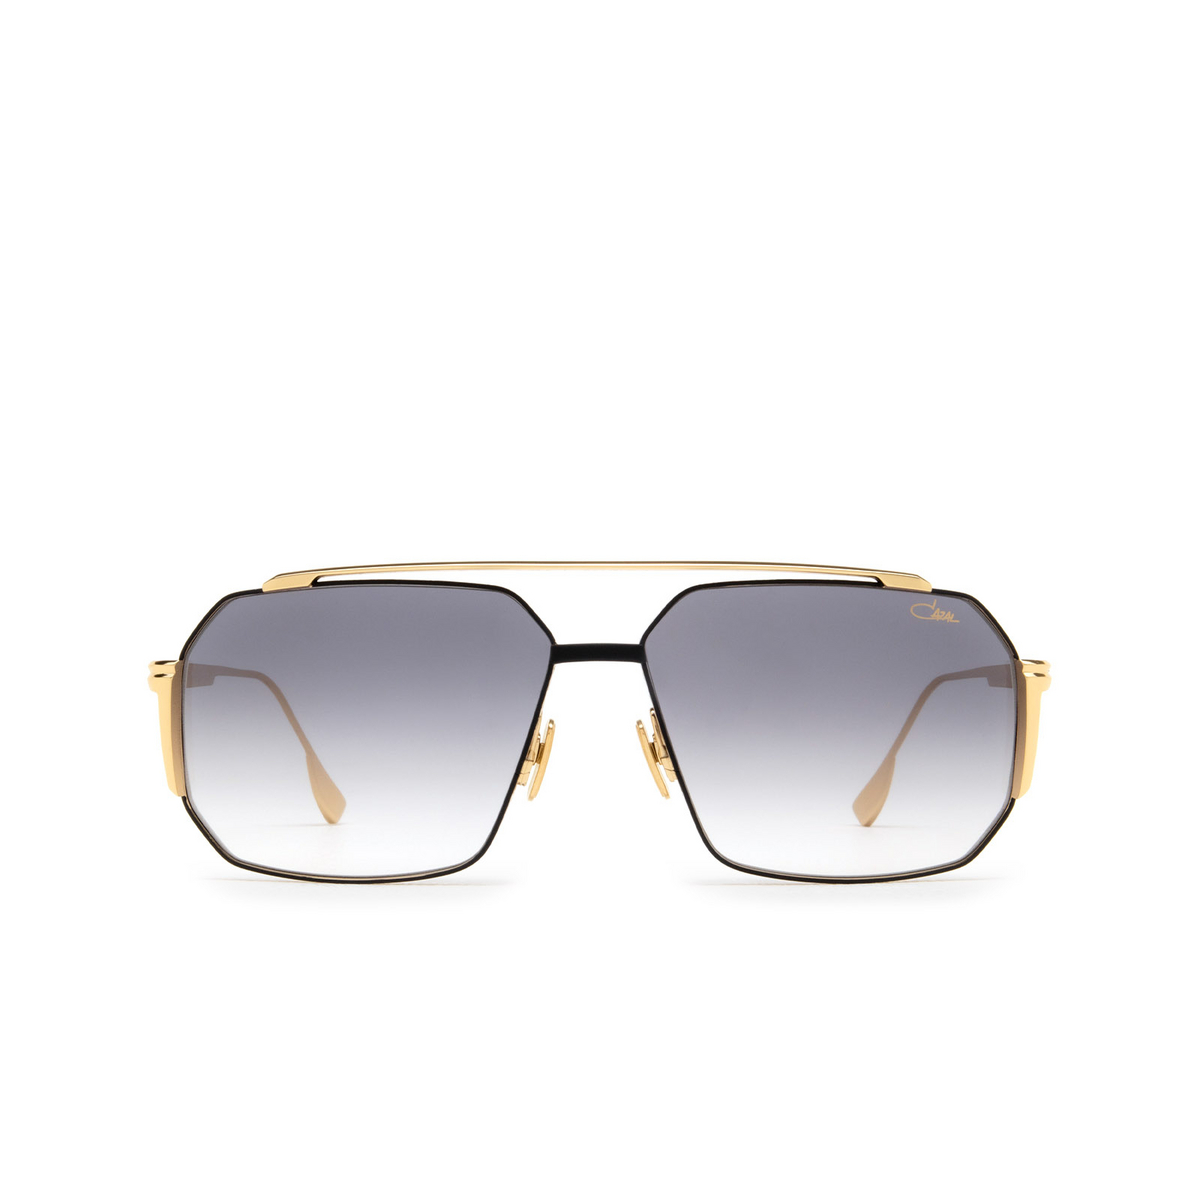 Cazal 755 Sunglasses 001 Black - Gold - front view